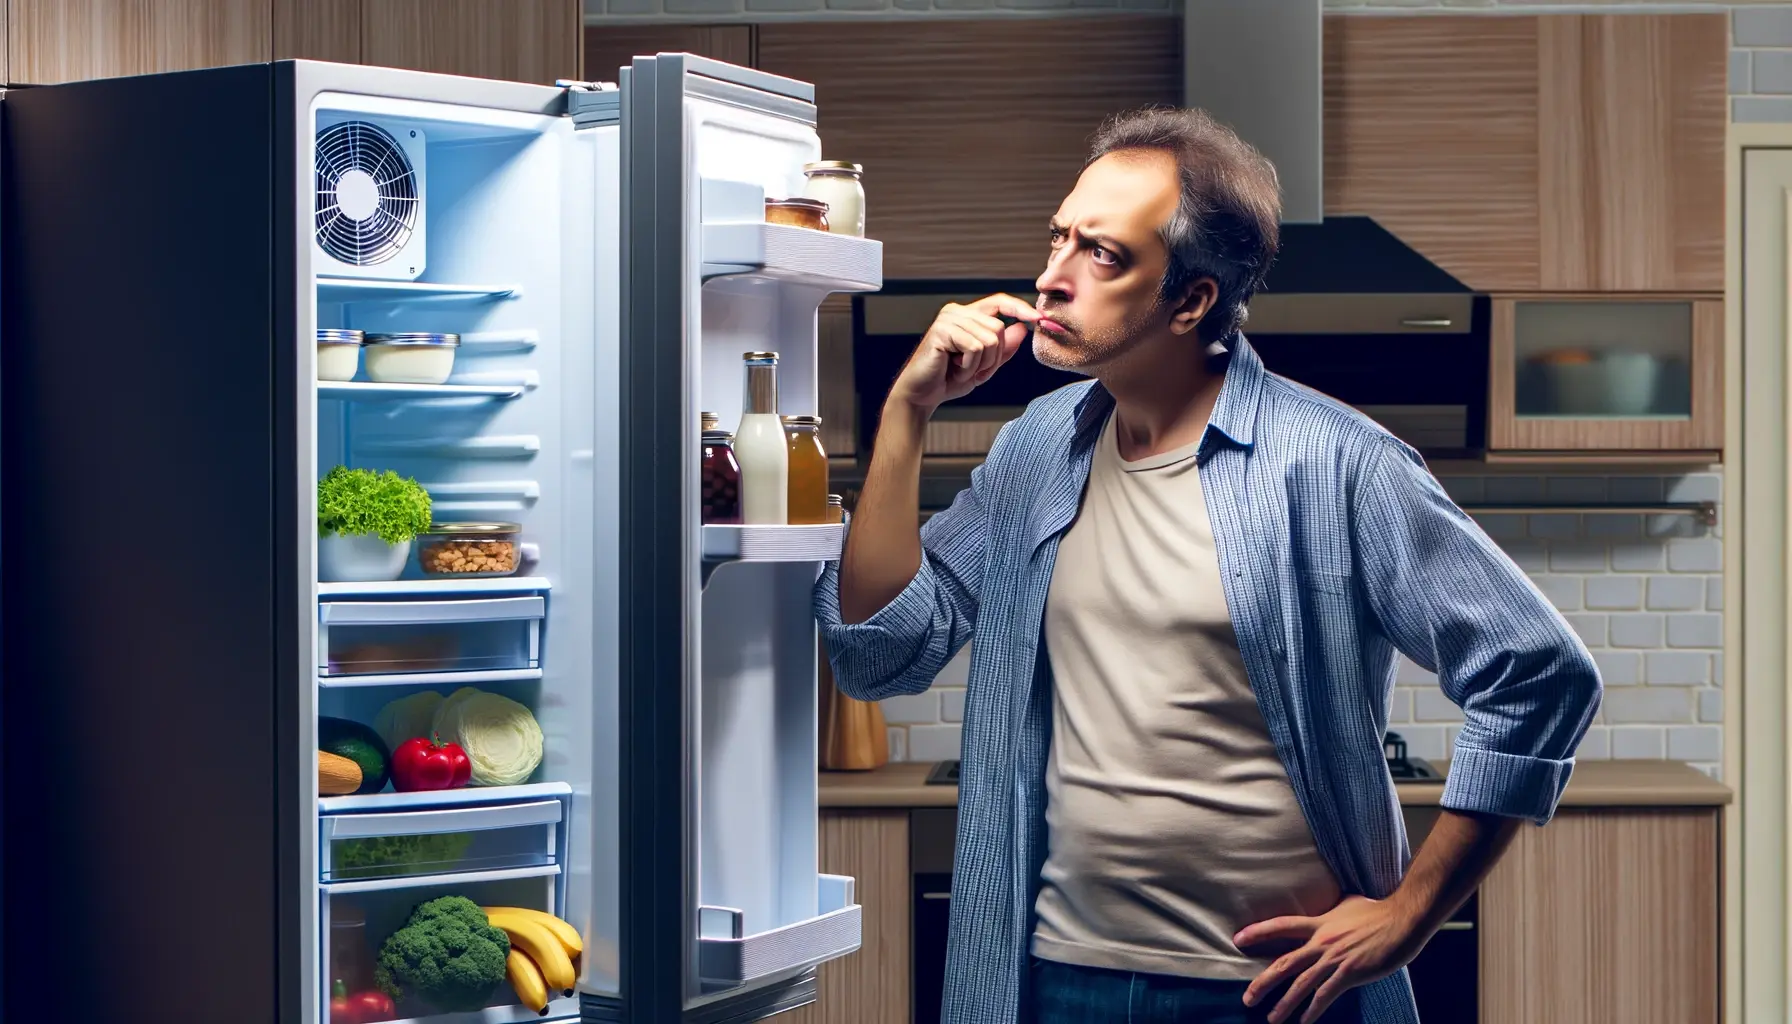 Image of man hearing strange noises coming from the fridge